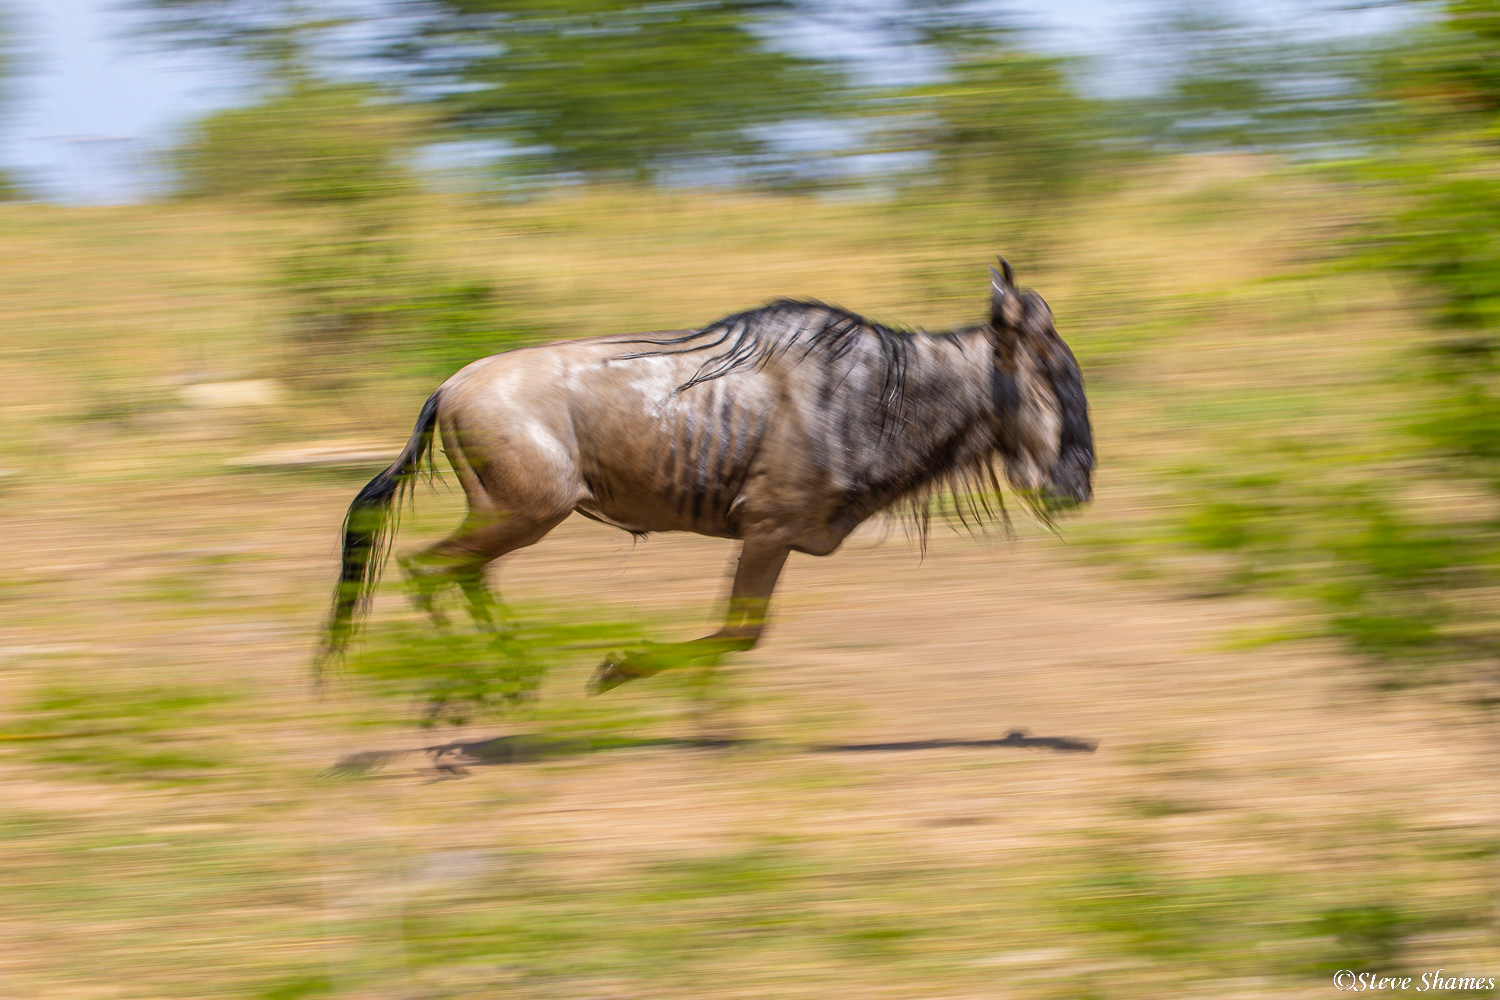 Action shot of a running wildebeest.